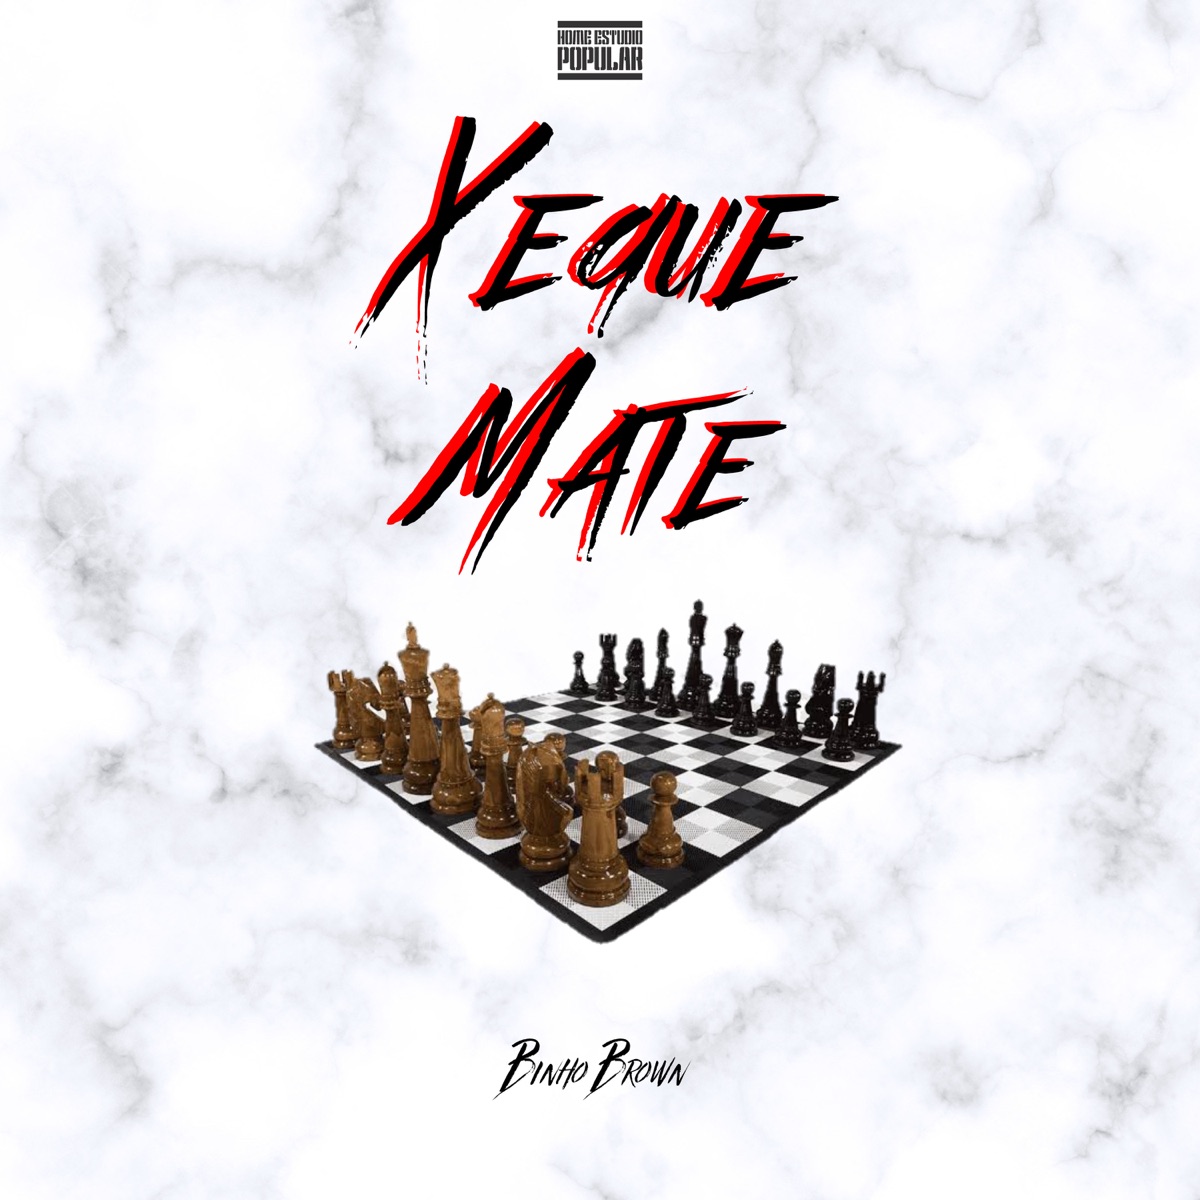 Xeque Mate (feat. DJ Adejota) - Single - Album by Binho Brown - Apple Music